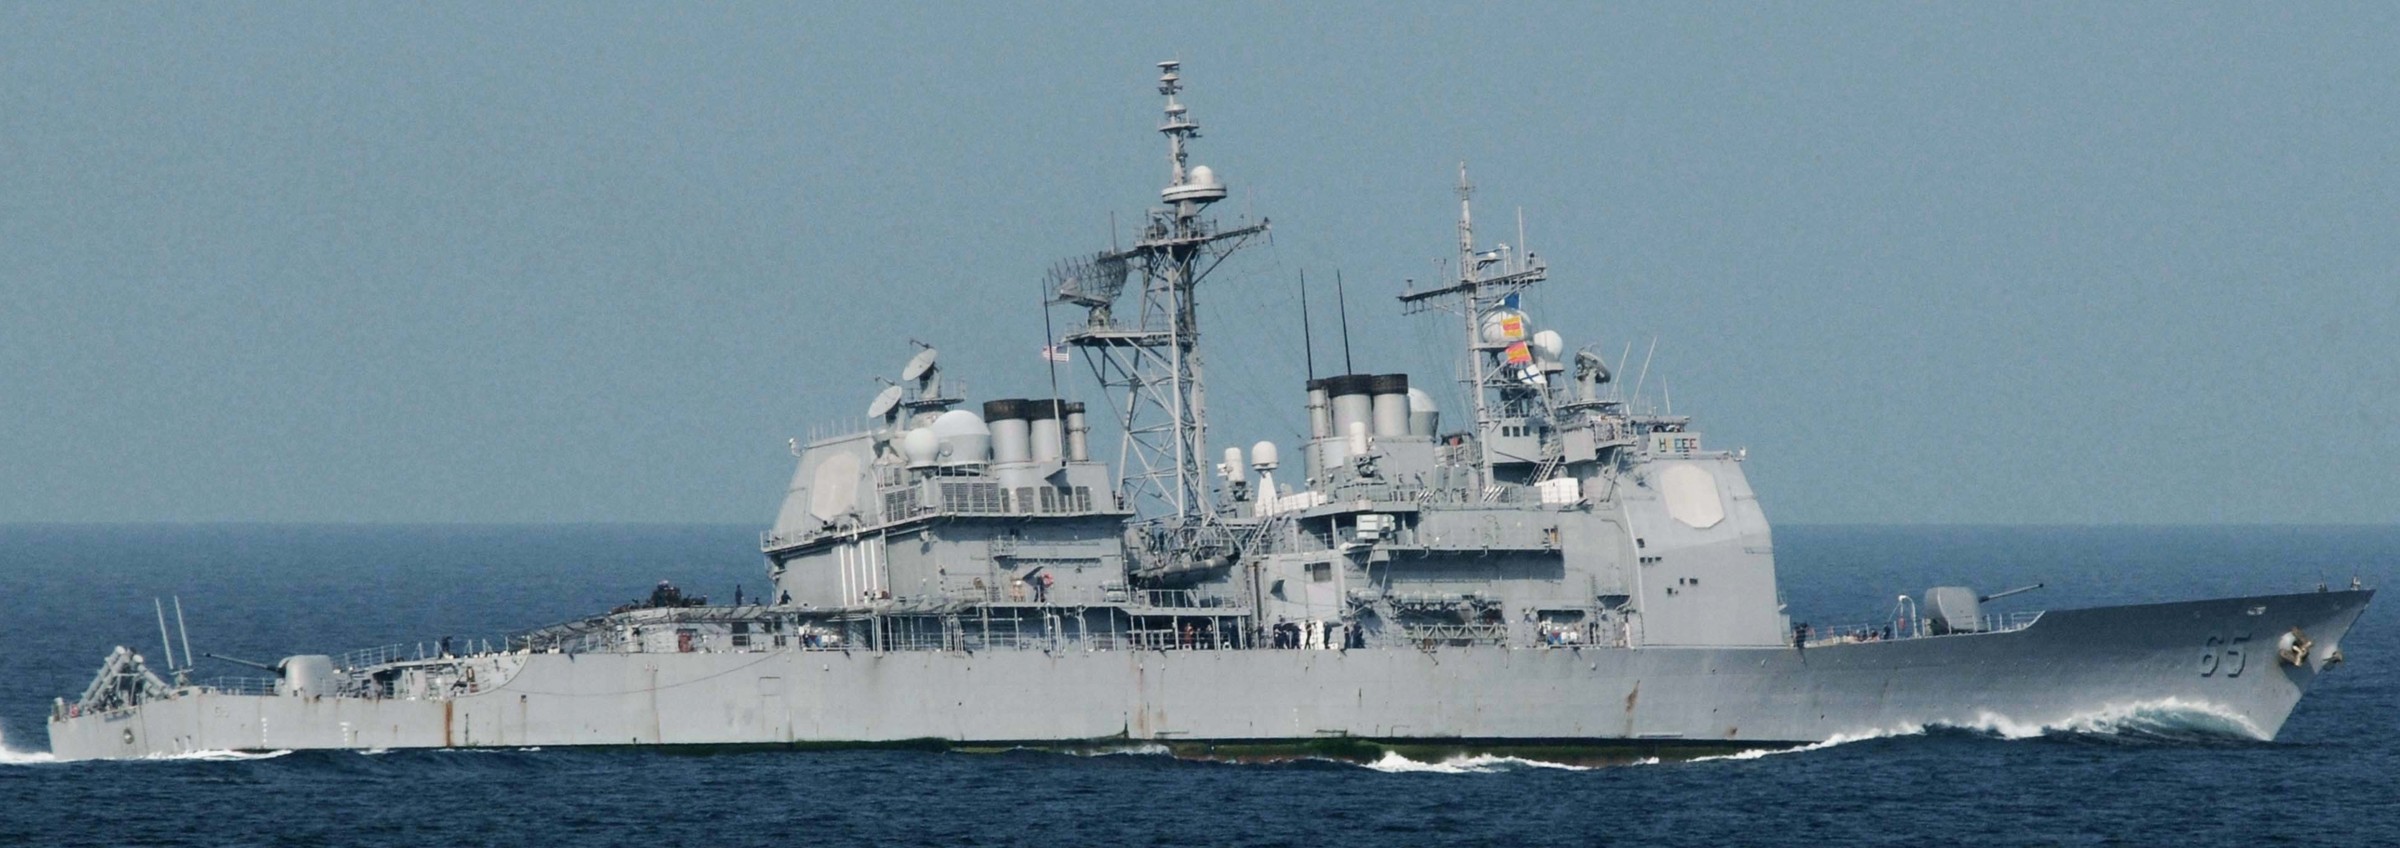 cg-65 uss chosin ticonderoga class guided missile cruiser aegis us navy 19